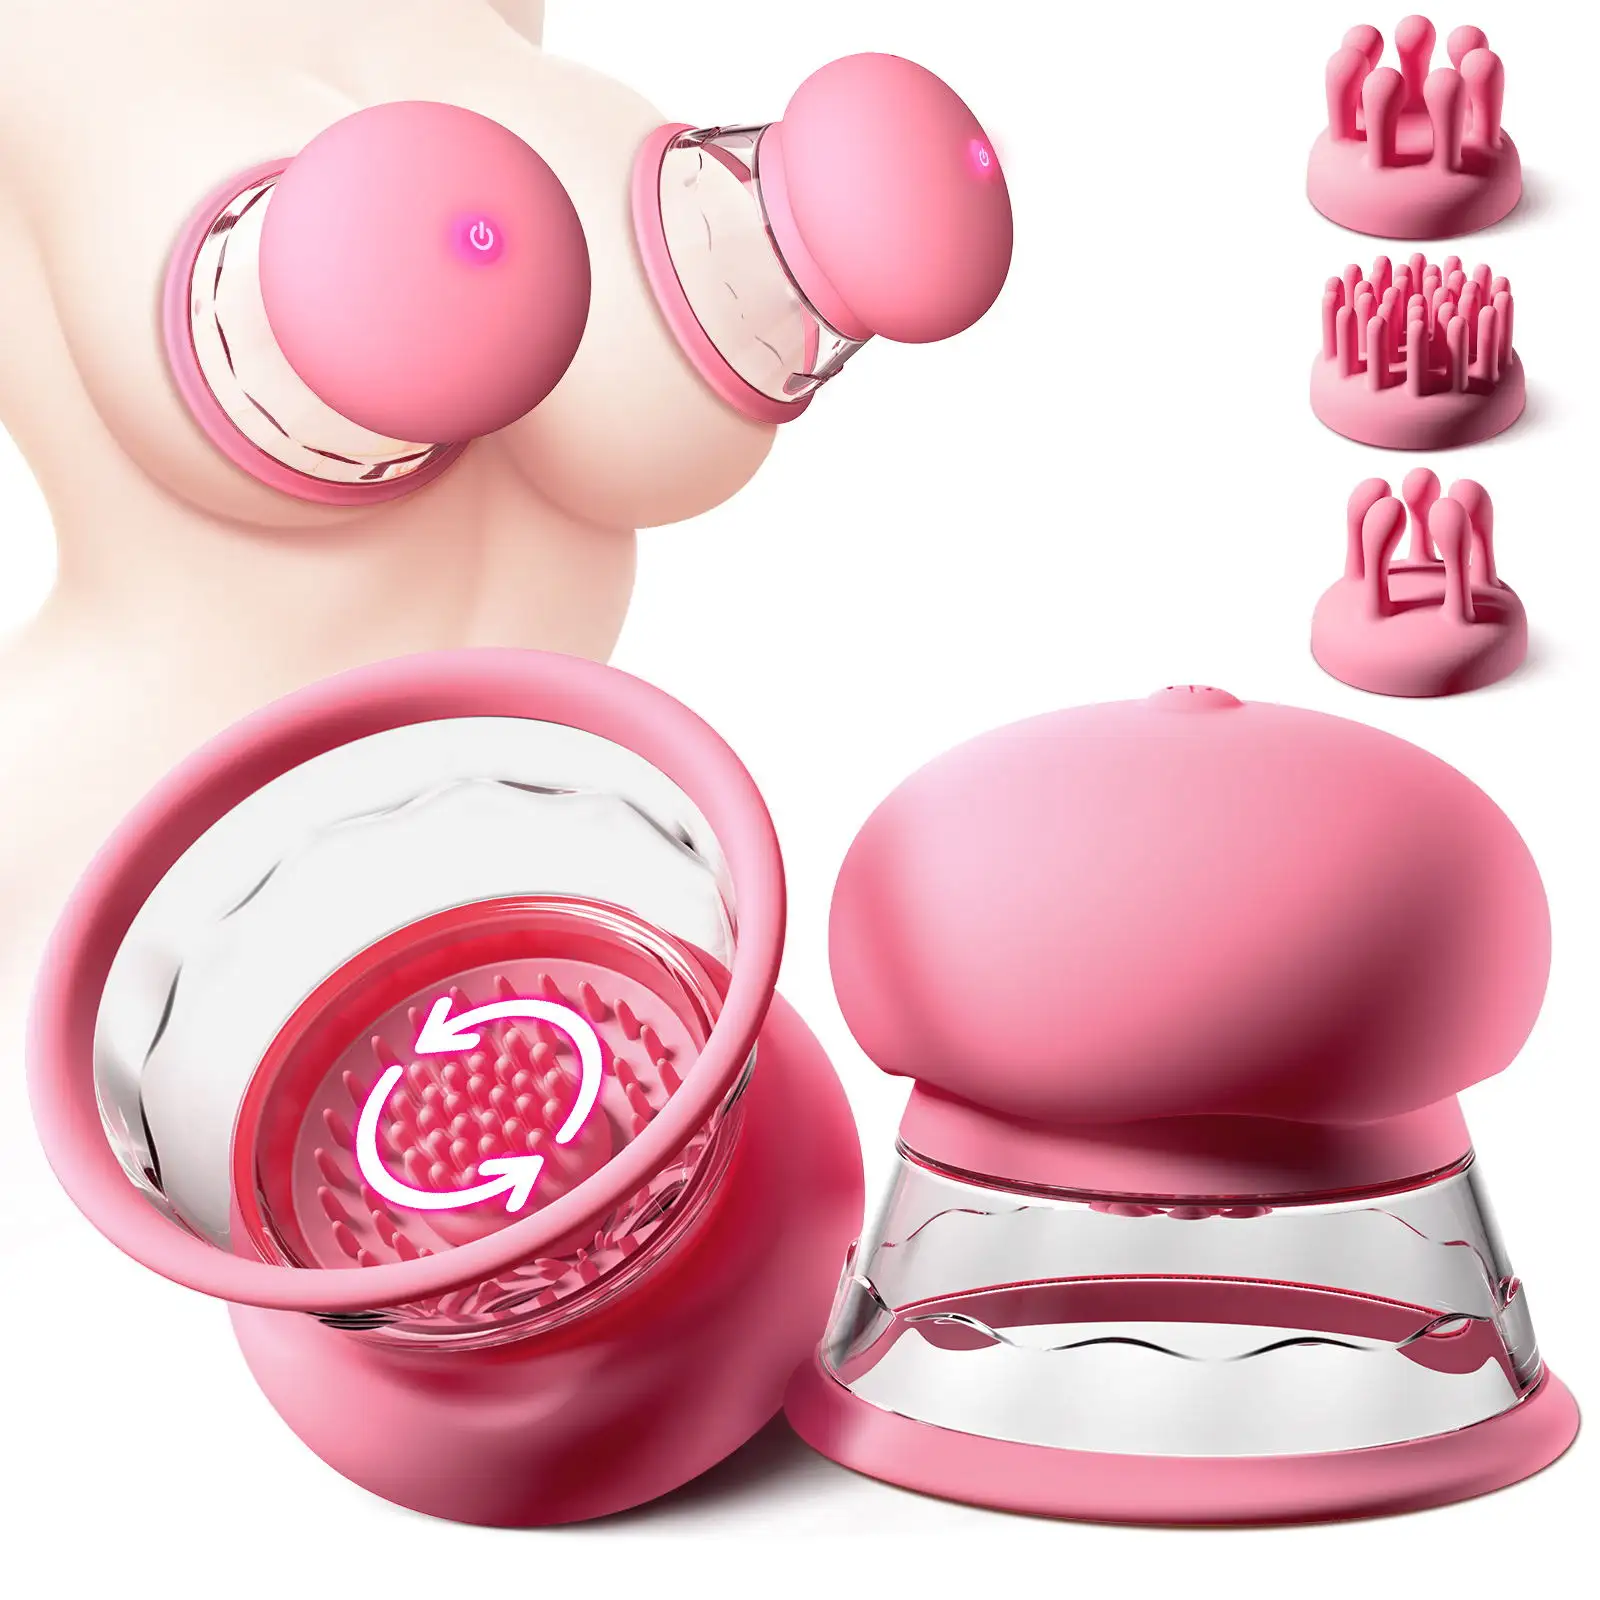 एएवी निर्माण युगल स्तन मसाजर क्लिटोरल जी स्पॉट जीभ महिला गुलाब वयस्क वाइब्रेटर सेक्स खिलौने महिला के लिए